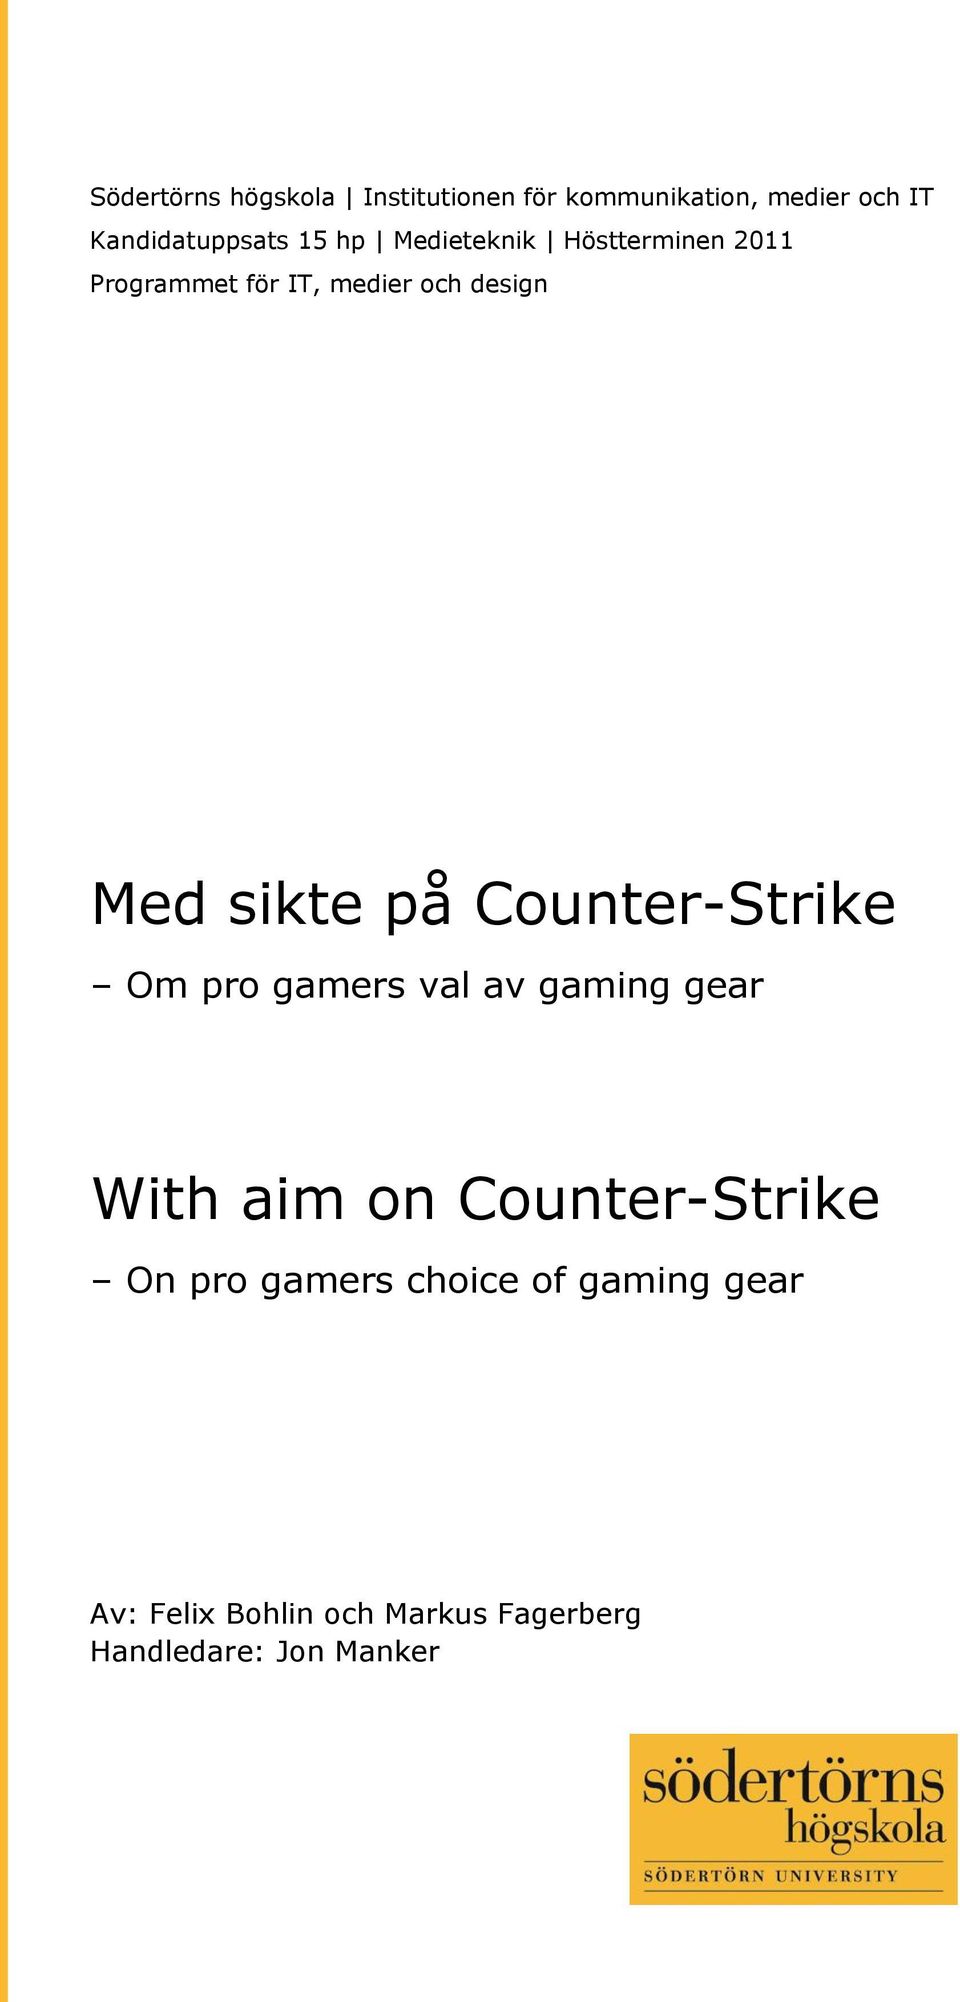 på Counter-Strike Om pro gamers val av gaming gear With aim on Counter-Strike On pro